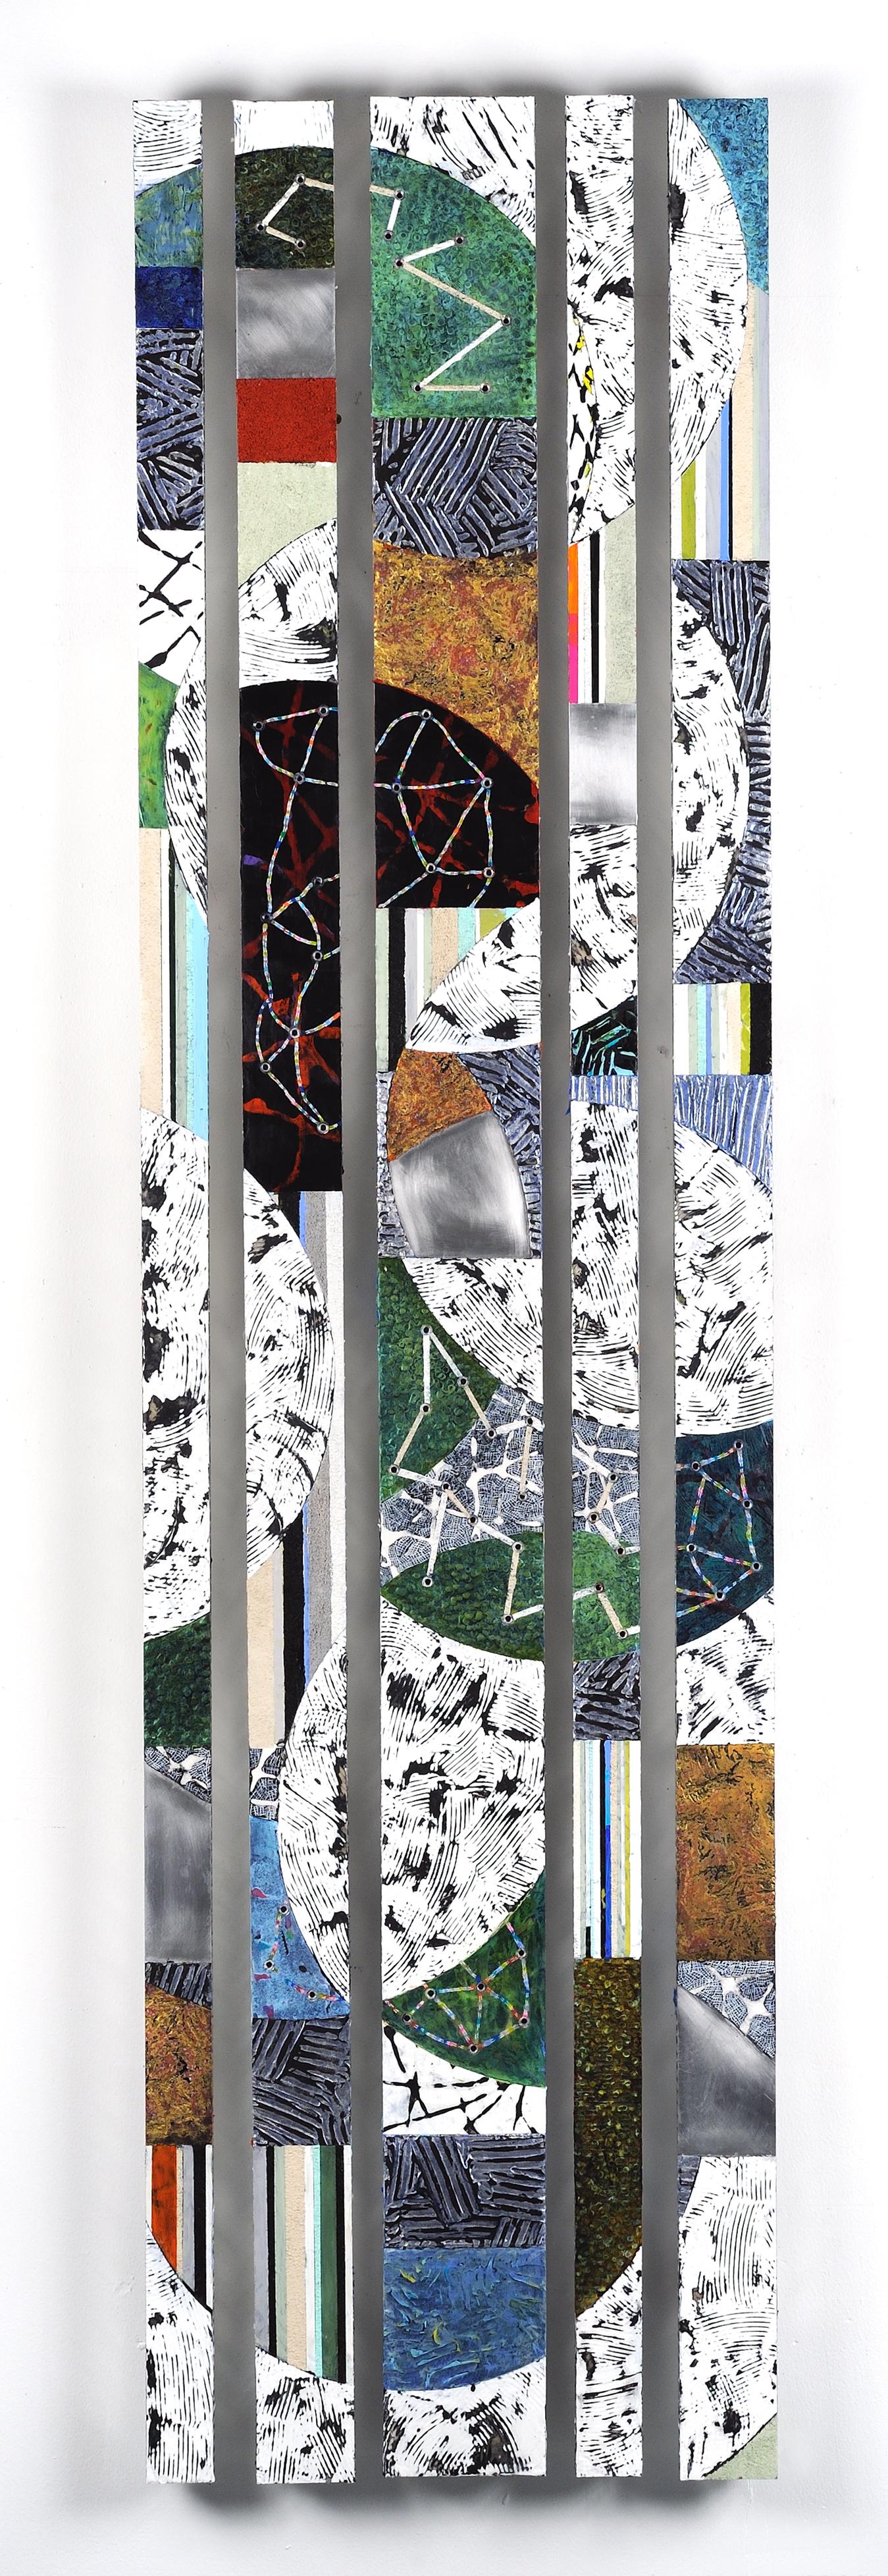 Francie Hester Abstract Sculpture - Strata 21 Set B, multicolored mixed media sculptural piece on aluminum